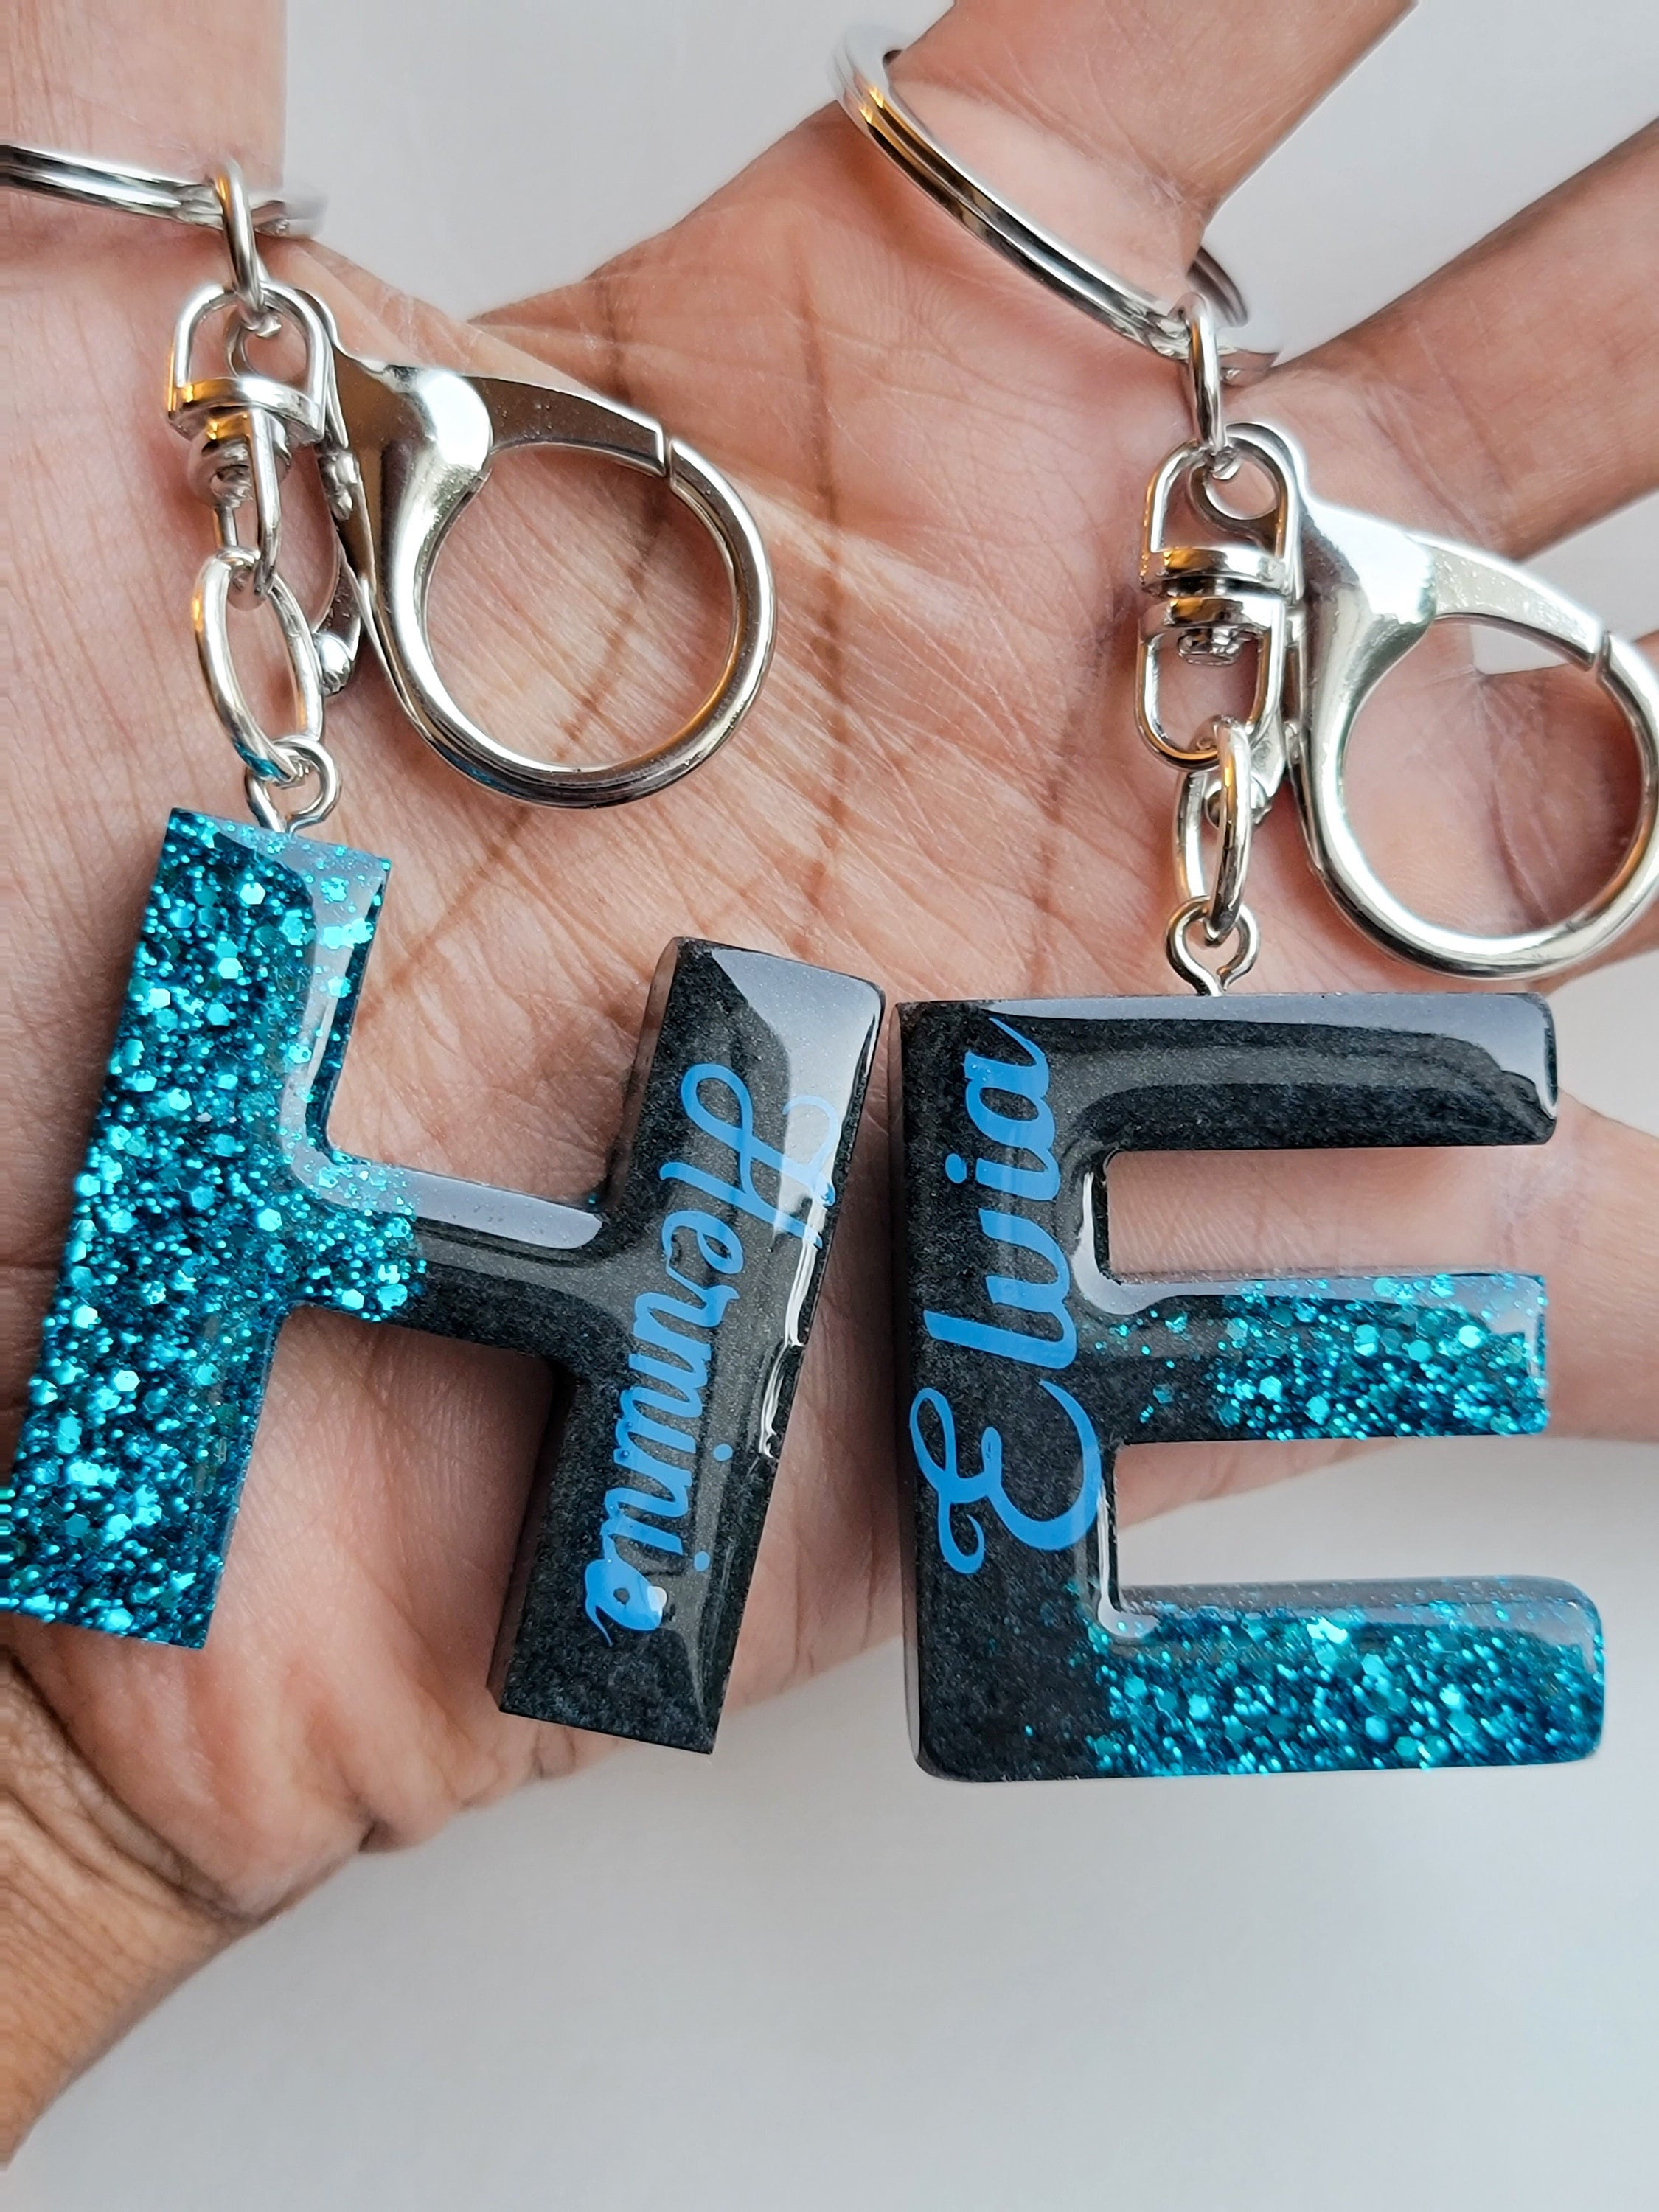 Keychain Initial Letter Key Chain Silver for Men Women Personalized  Alphabet Monogram Keychain for Car Keys, C